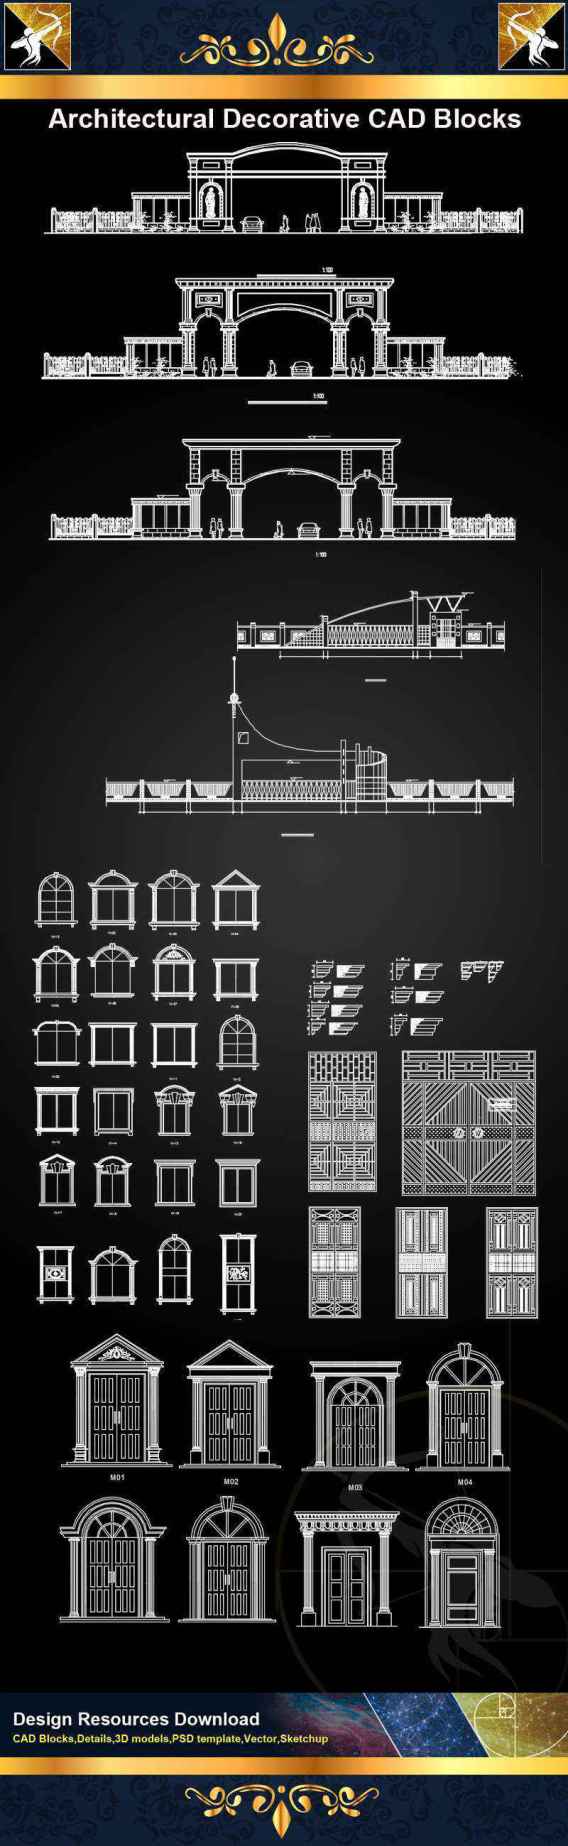 ★【Architectural Decorative CAD Blocks】@Autocad Decoration Blocks,Drawings,CAD Details,Elevation